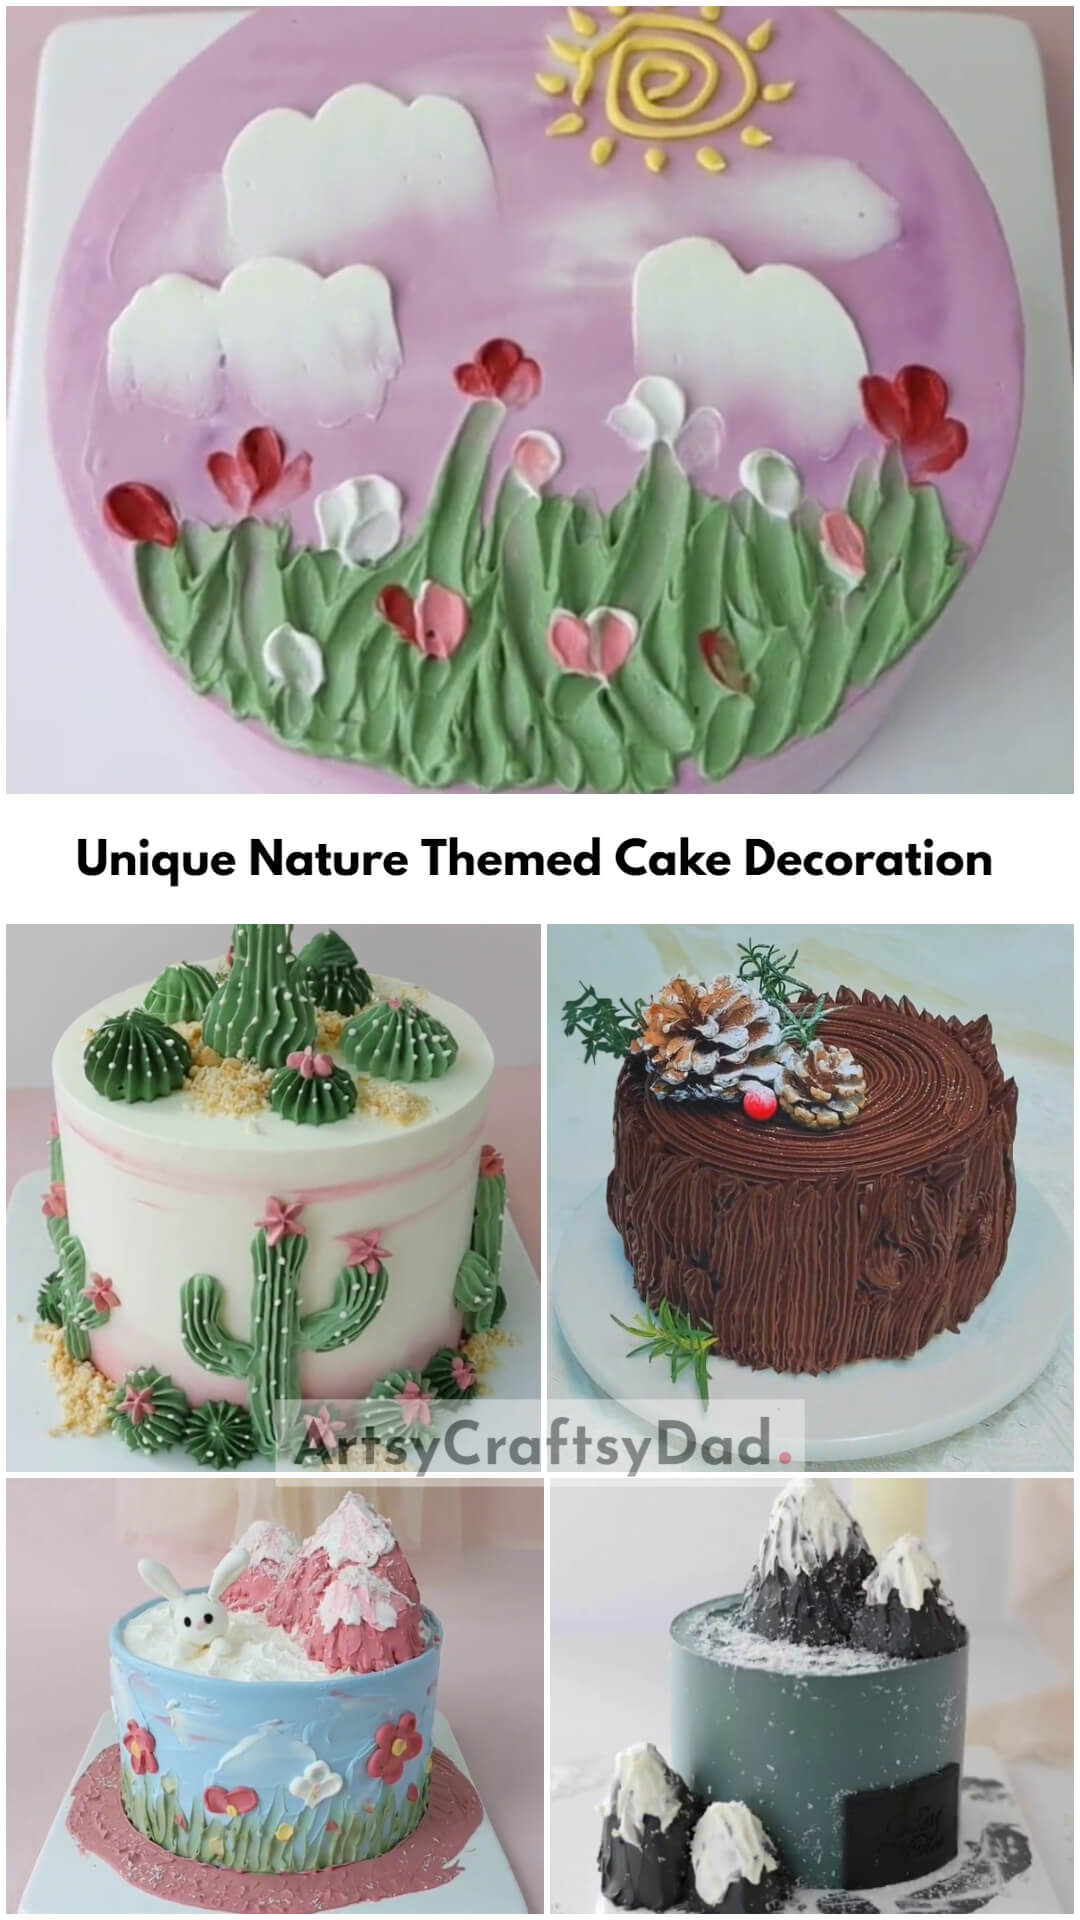 Unique Nature Themed Cake Decoration Idea